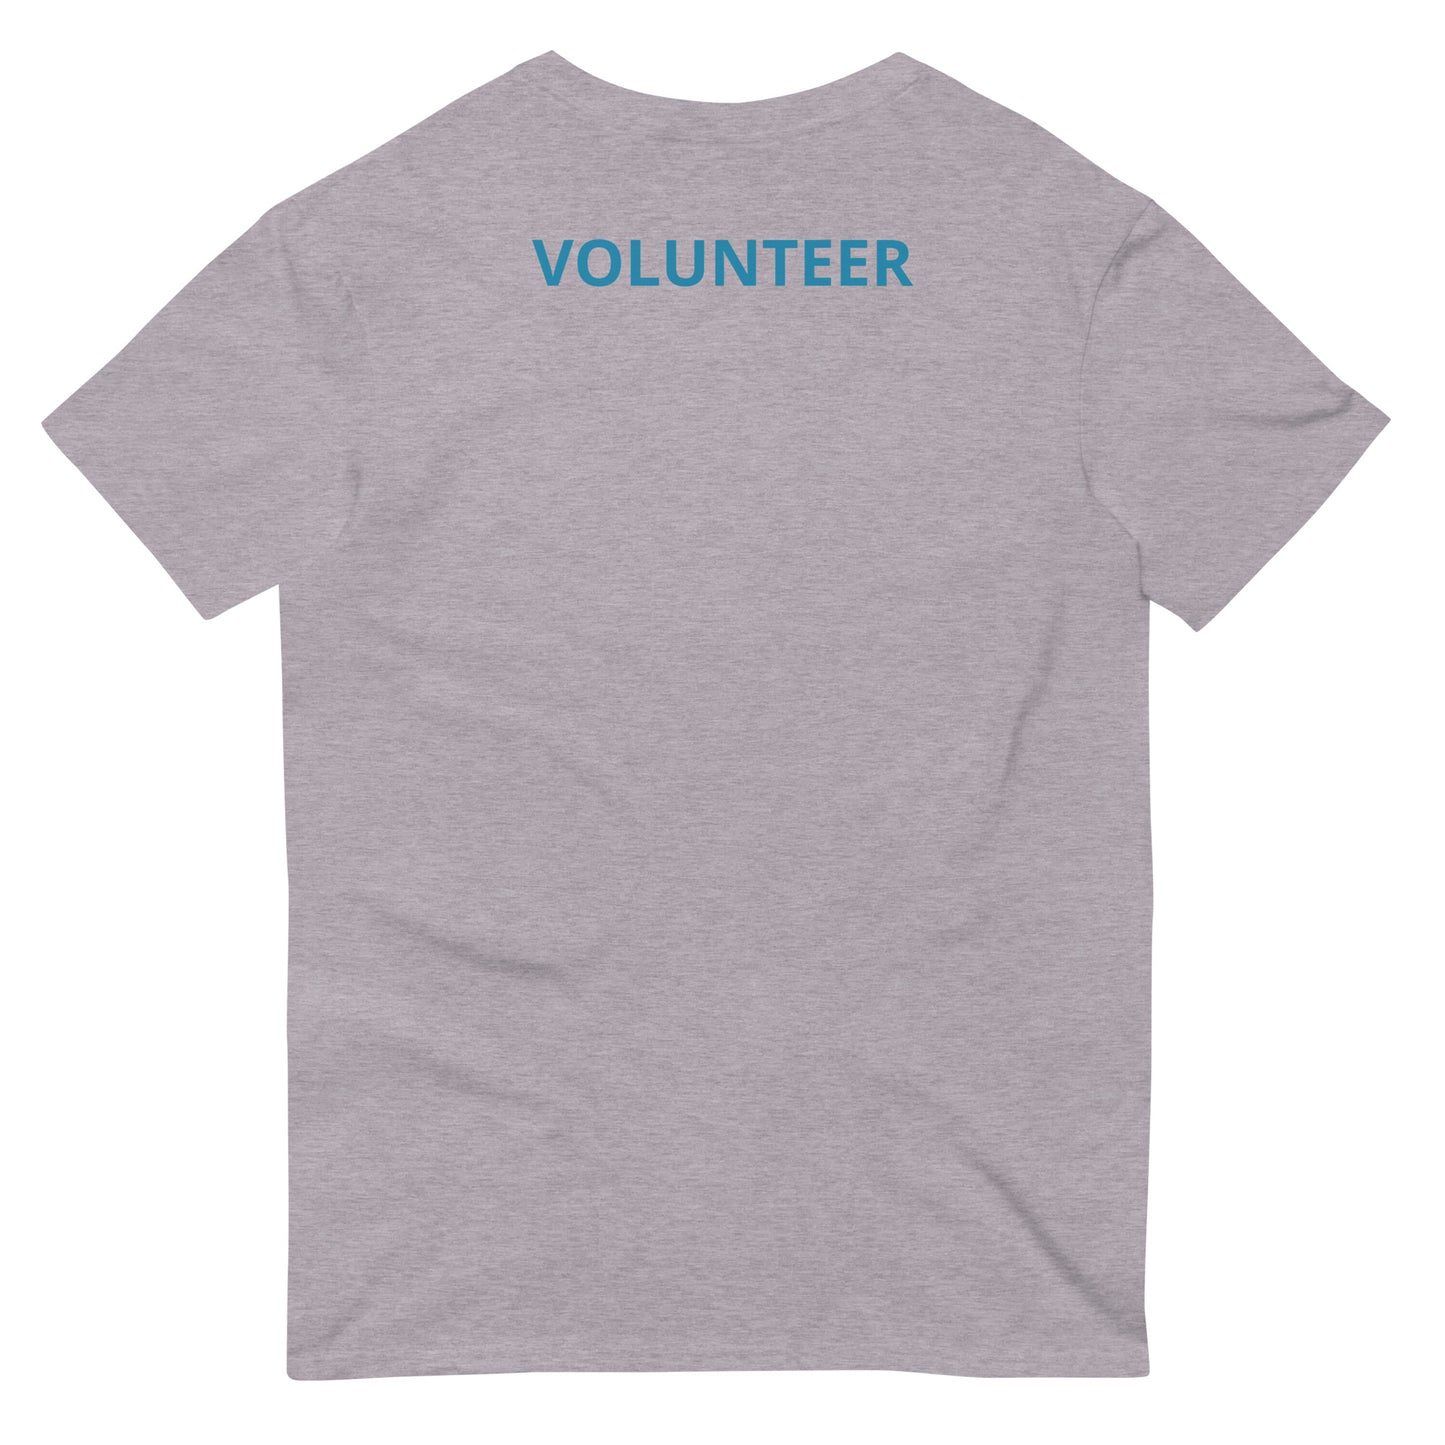 DSCRC Short-Sleeve Unisex Lightweight Volunteer T-Shirt